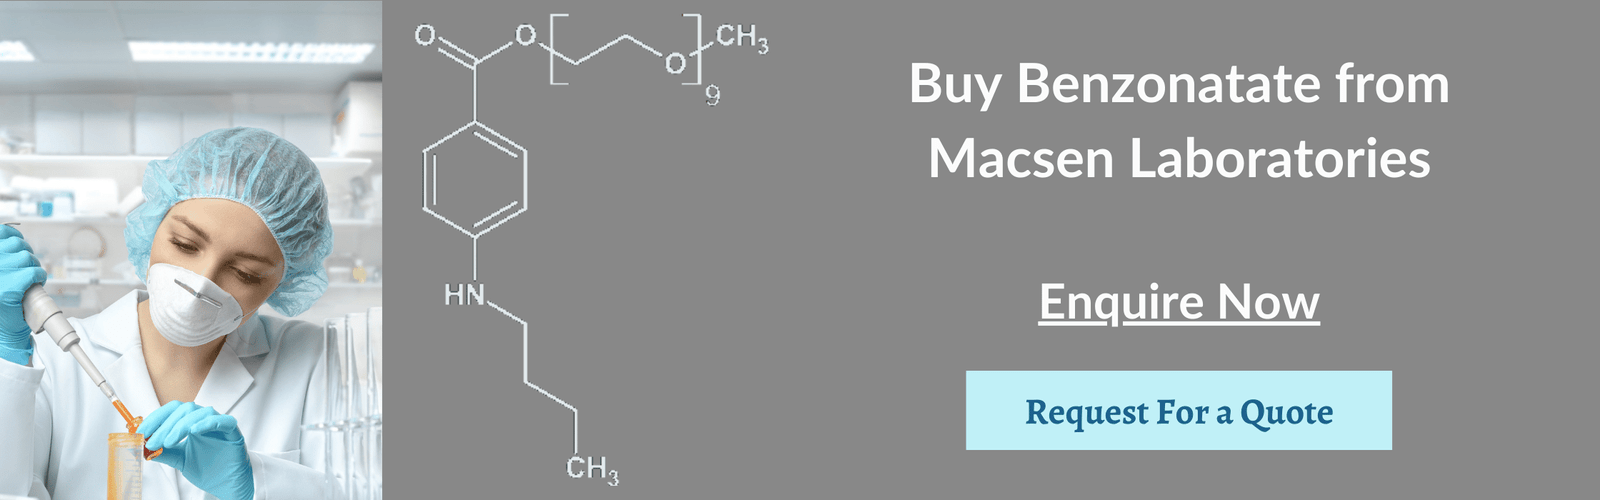 Buy Benzonatate from Macsen Laboratories 